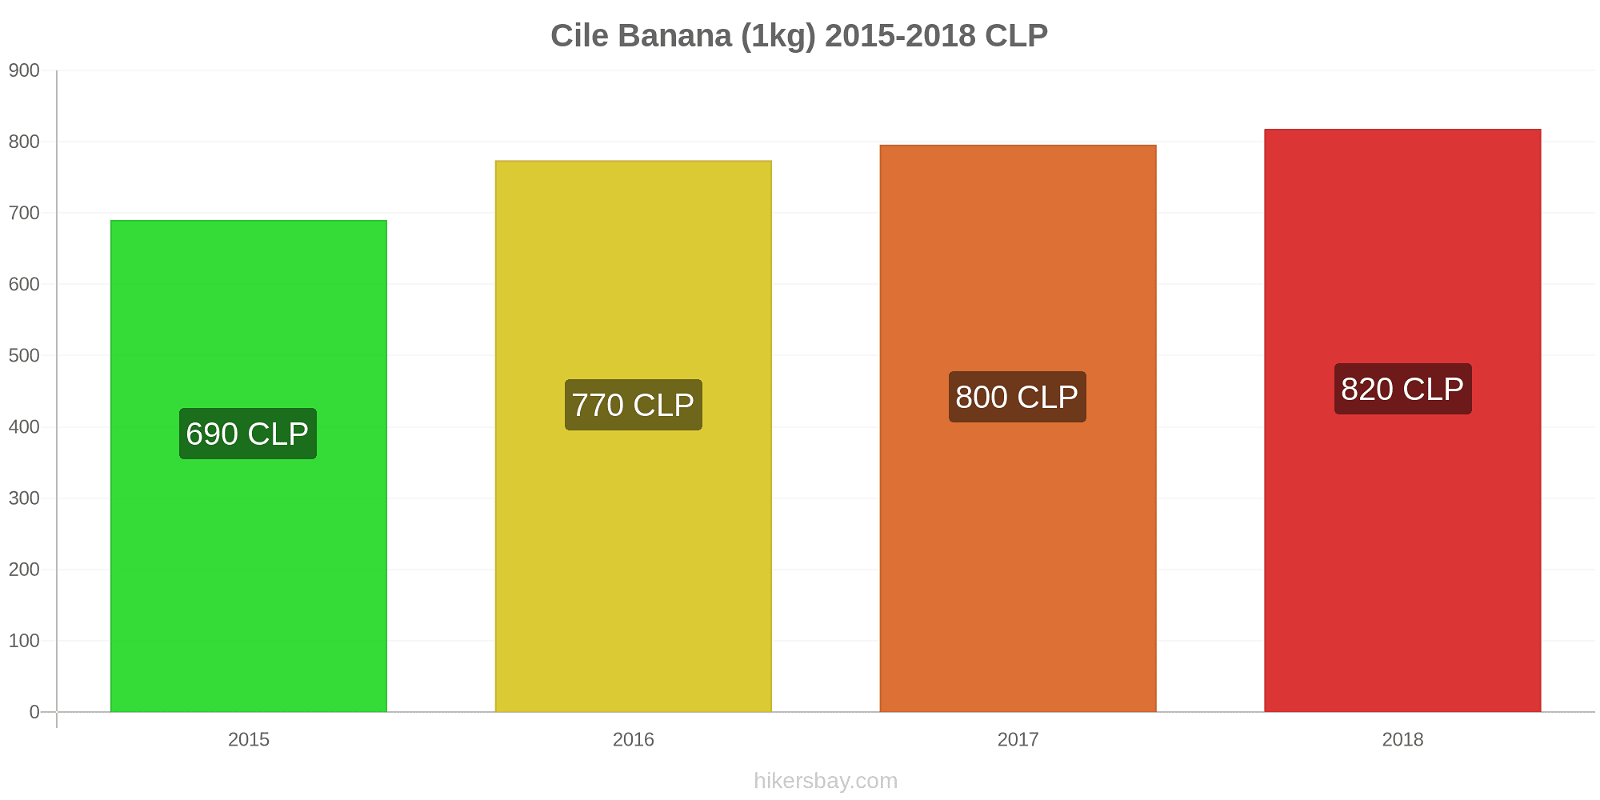 Cile cambi di prezzo Banane (1kg) hikersbay.com